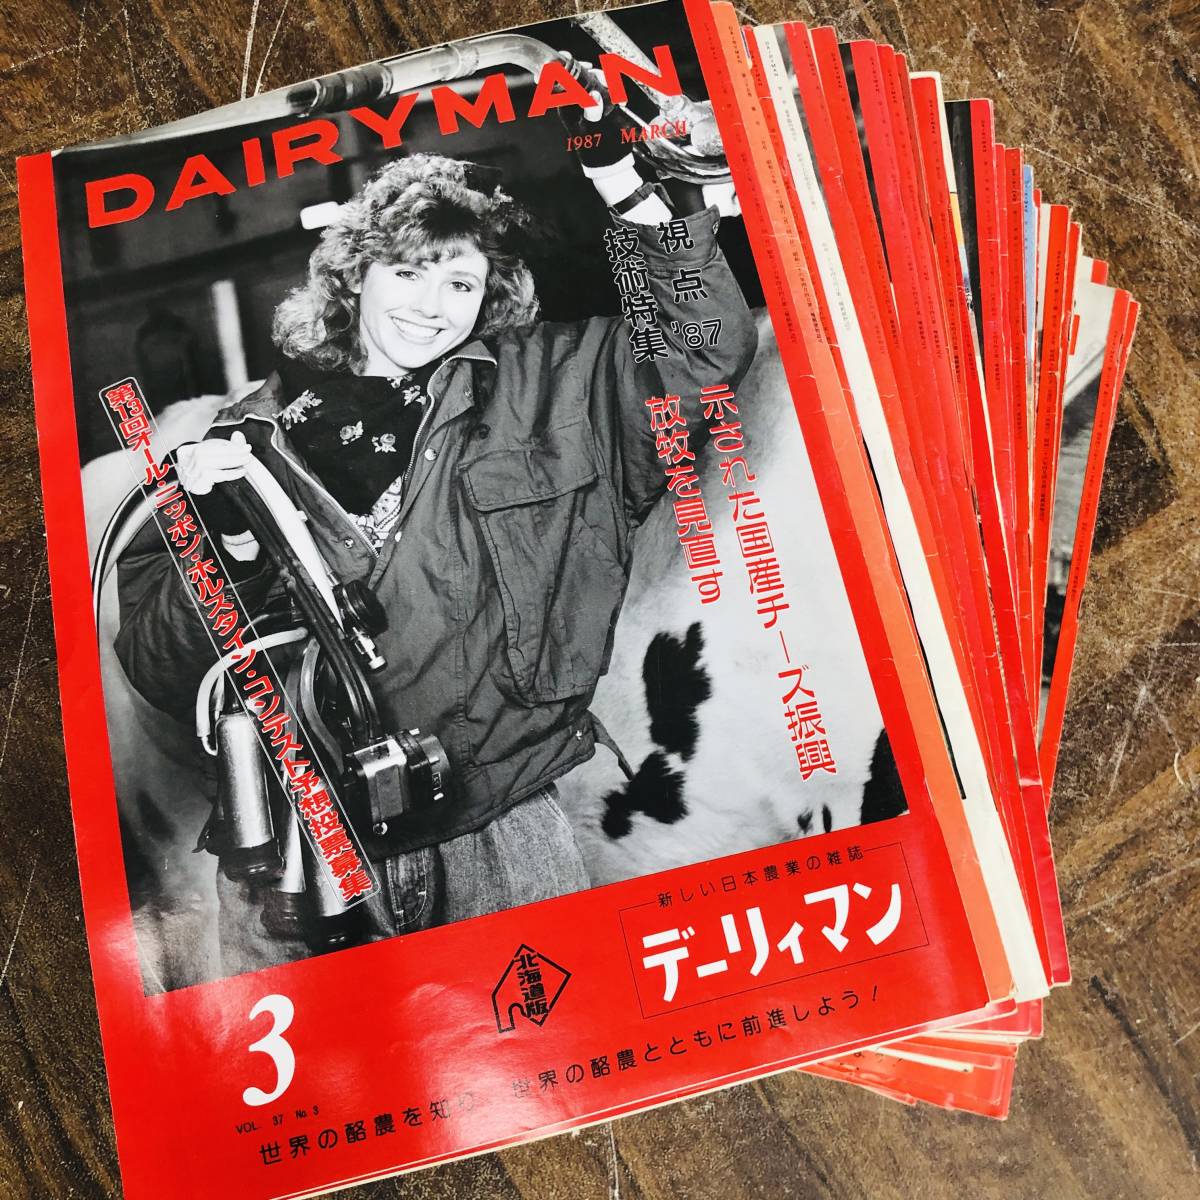 DAIRYMAN デーリィマン 北海道版 新しい日本農業の雑誌 1965年～1987年 抜けあり 31冊セット 増刊号 酪農 農業 雑誌 菊MZ_画像1